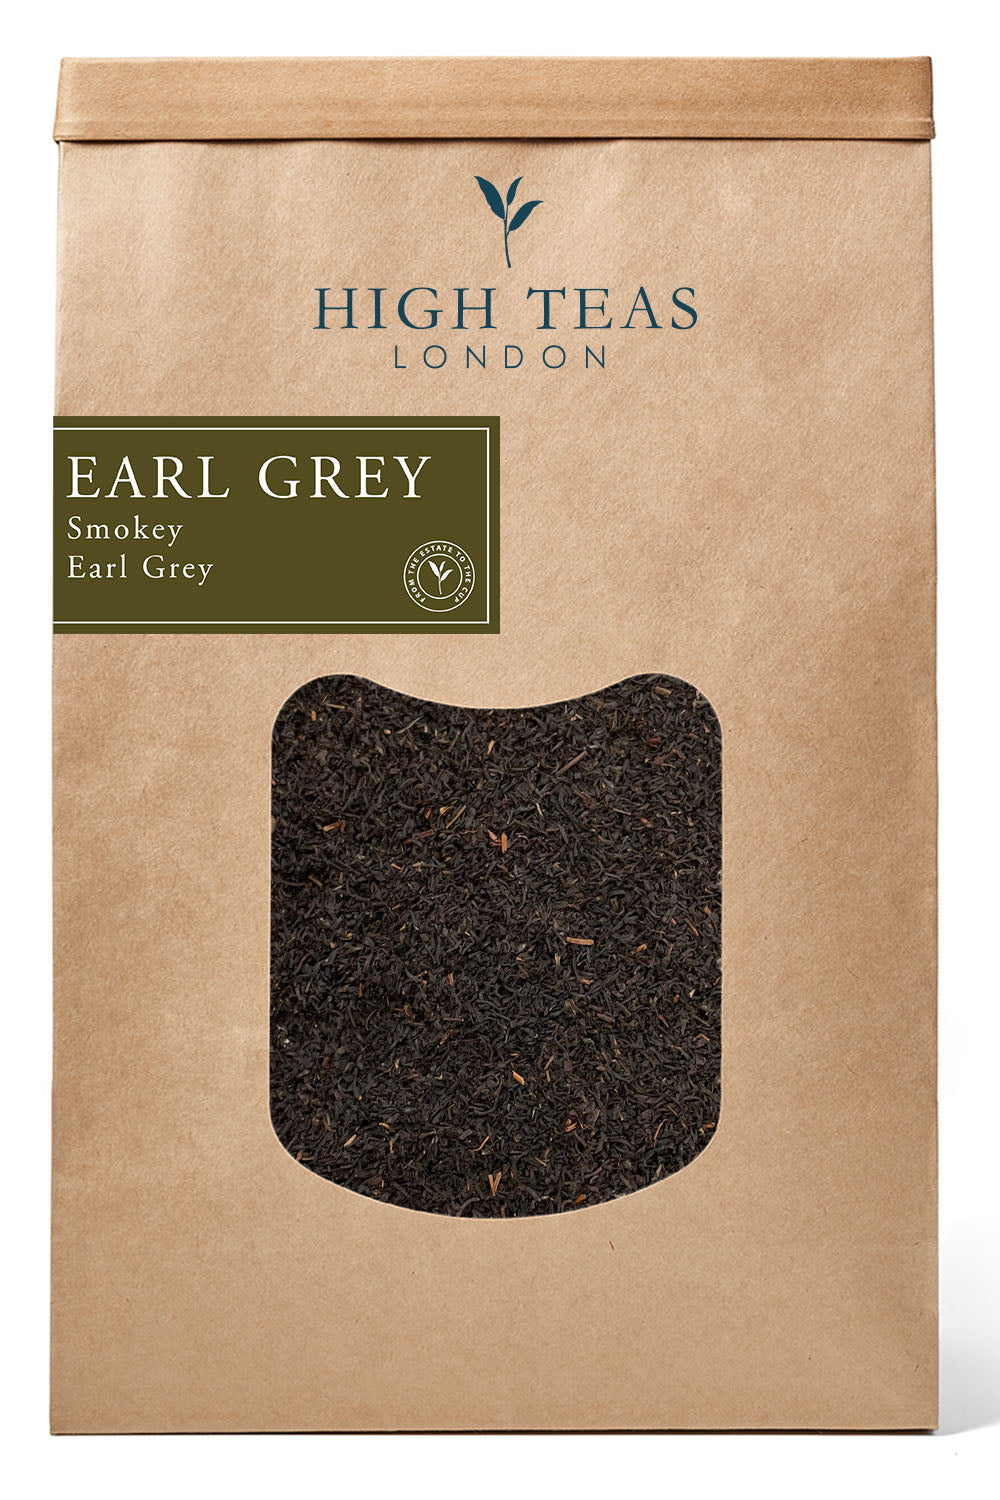 Smoky Earl Grey-500g-Loose Leaf Tea-High Teas